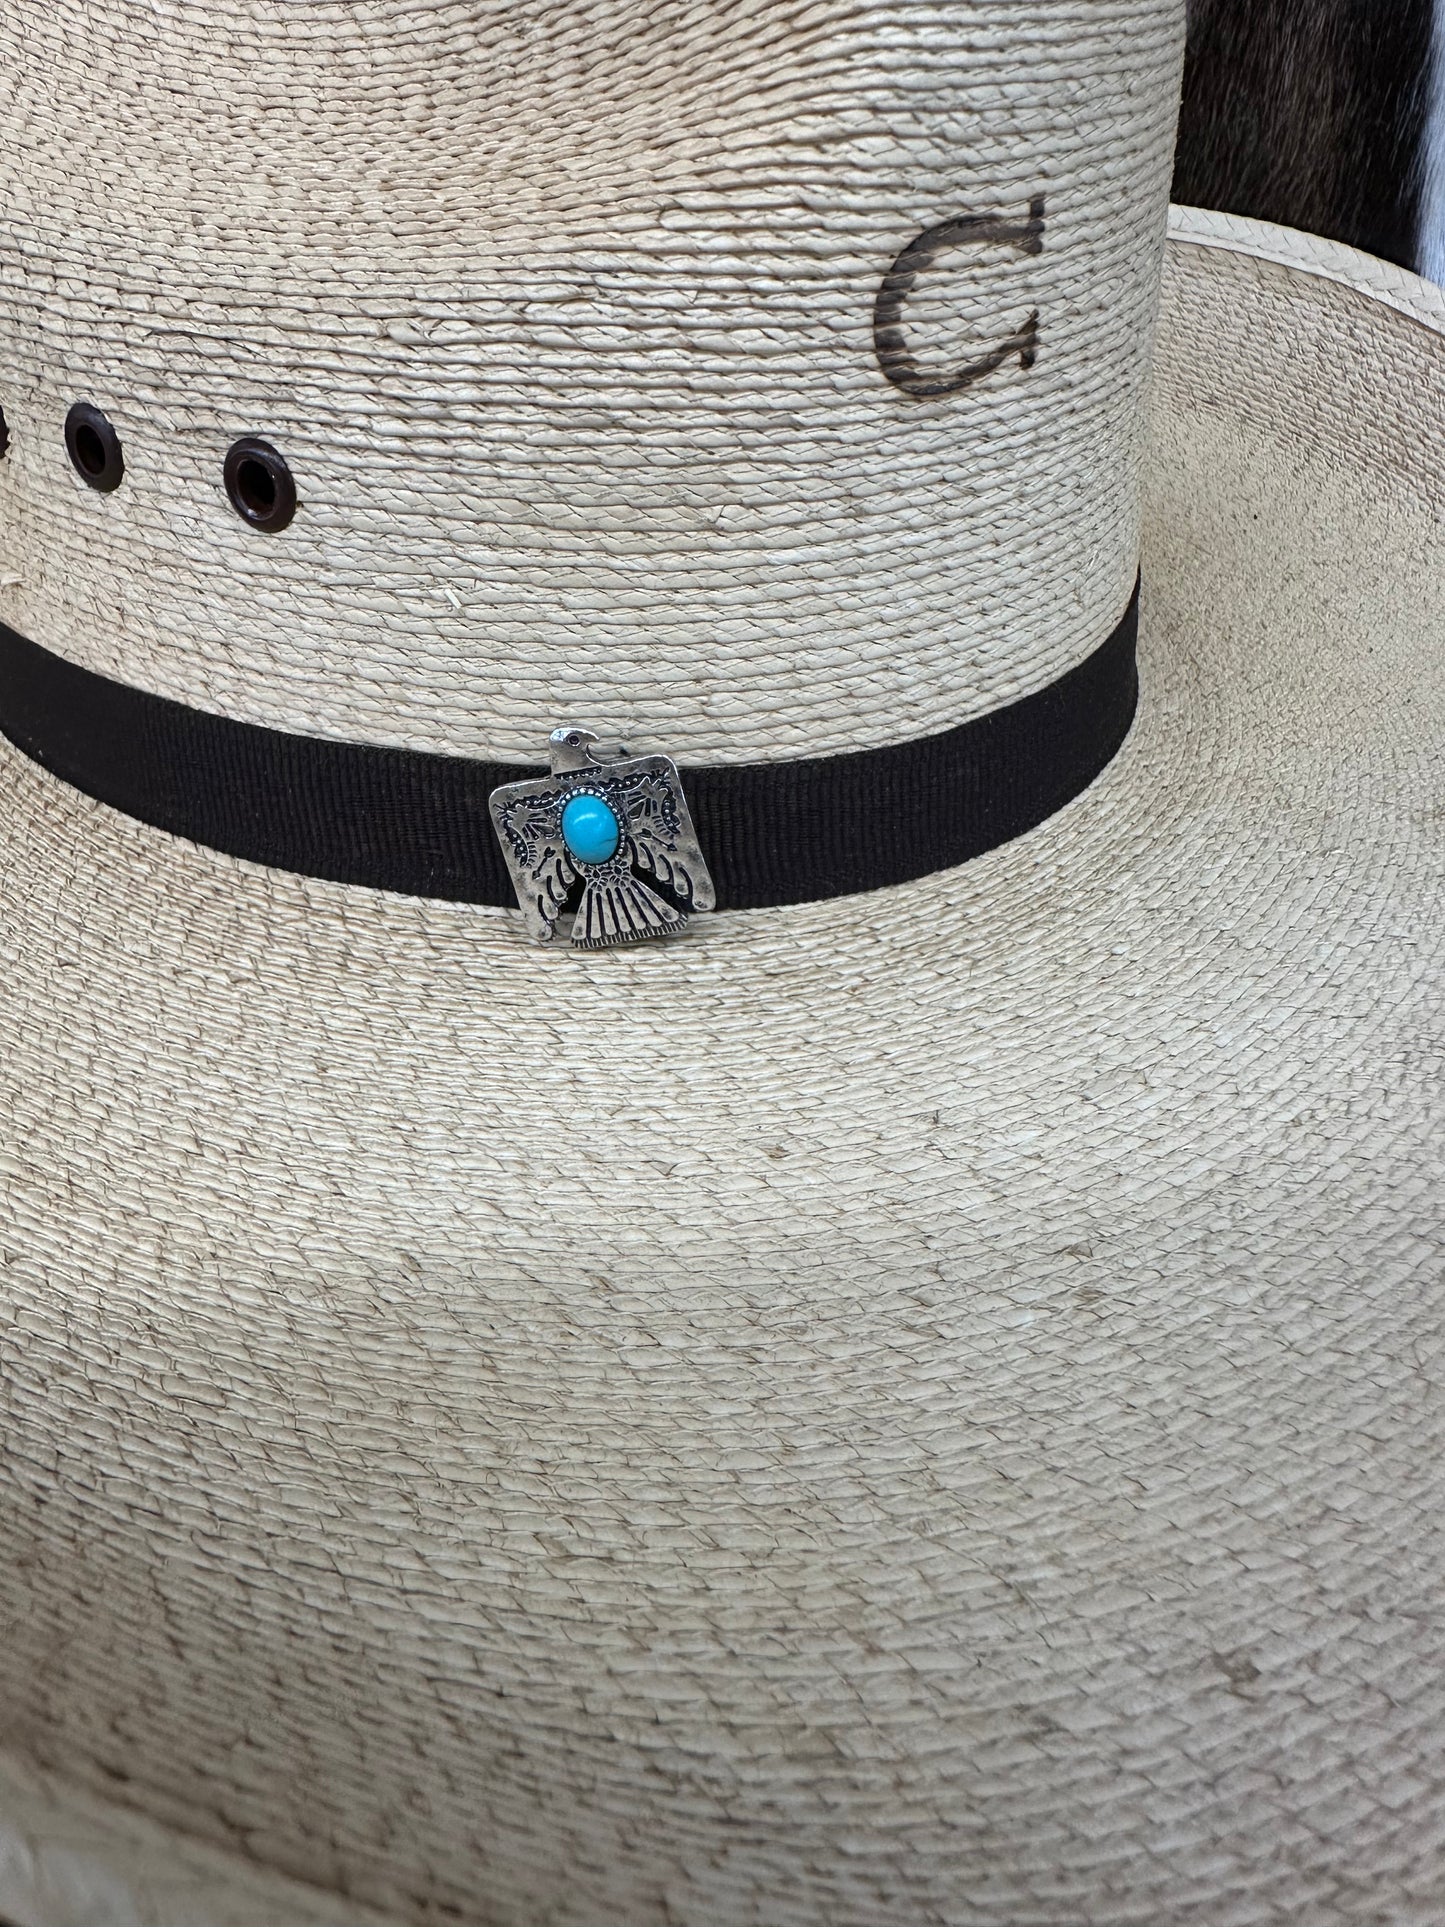 The Turquoise Thunderbird Hat Pin